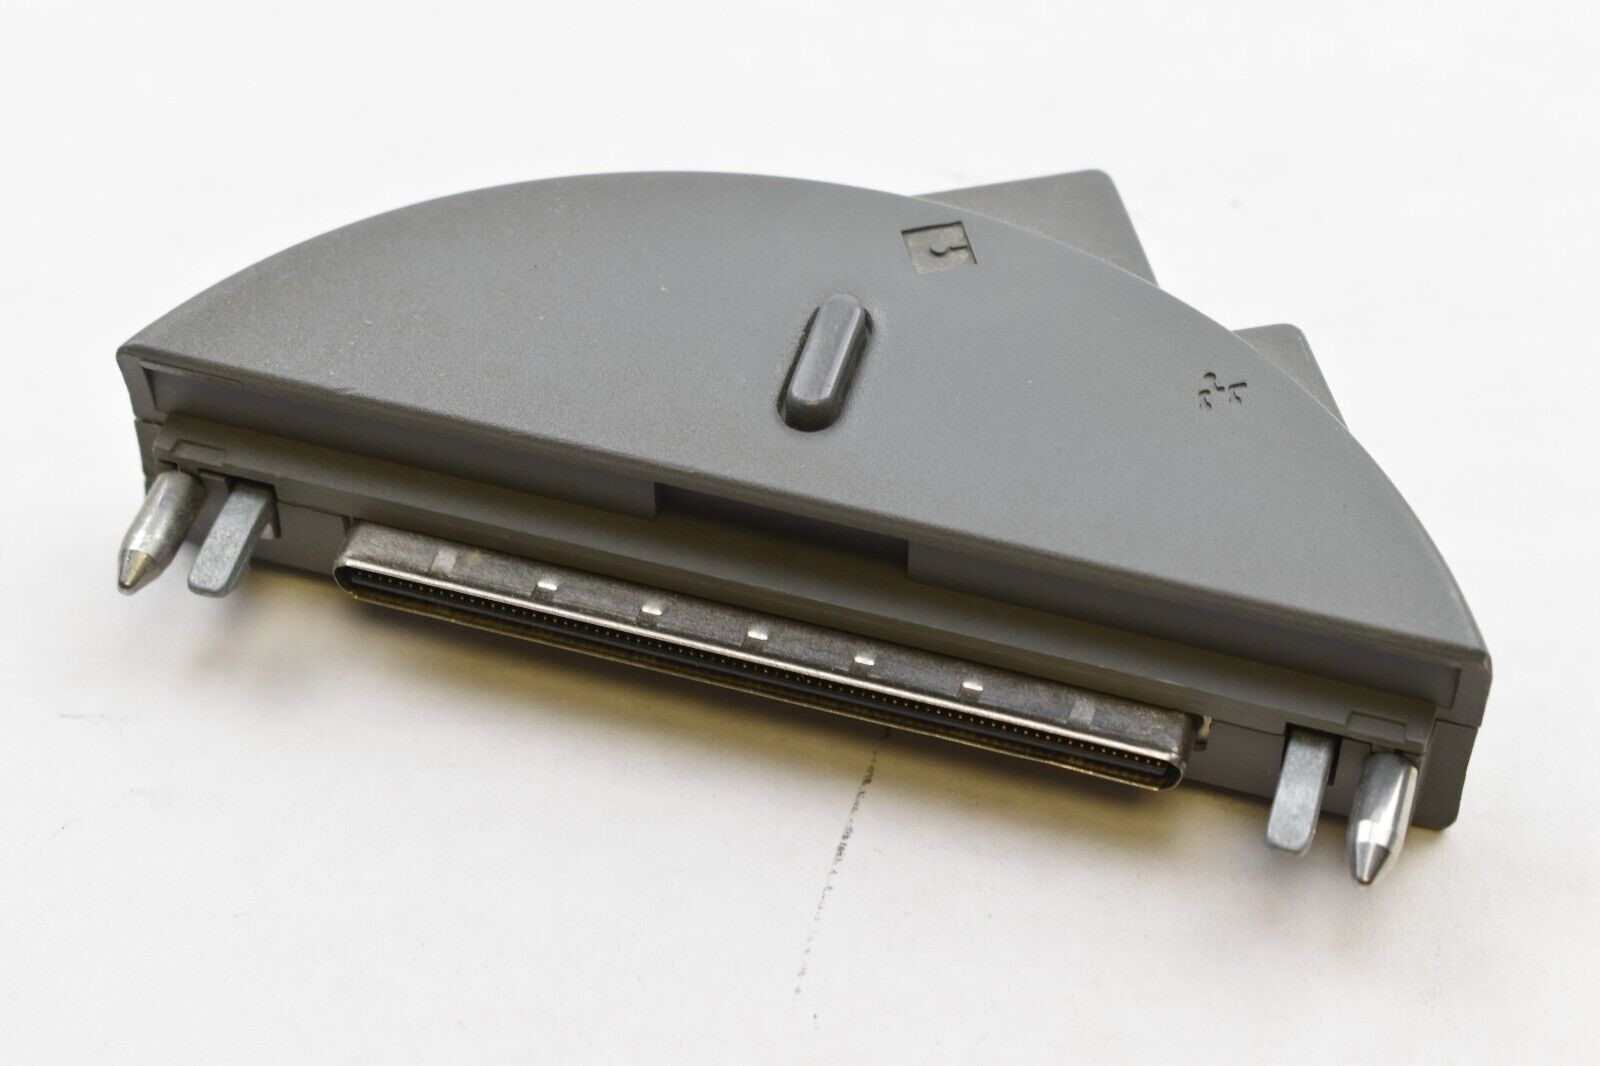 Apple PowerBook Duo Floppy Drive Adapter M7781